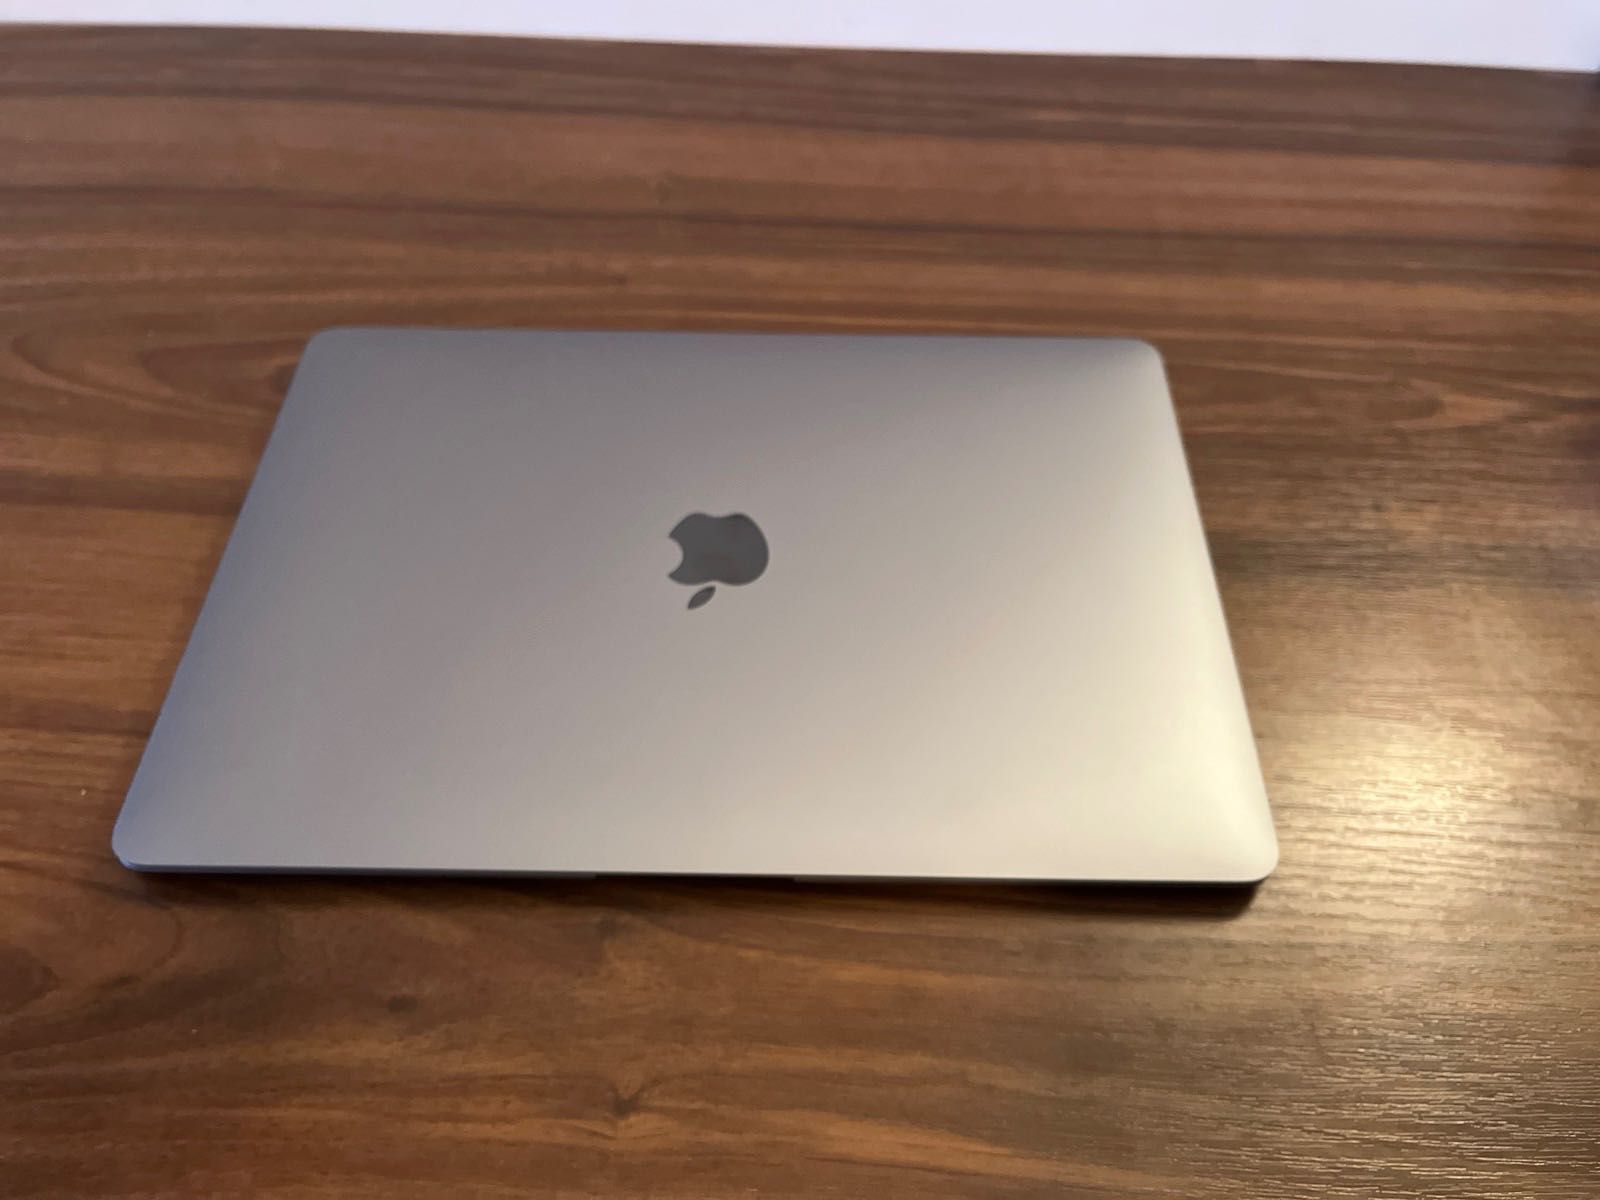 MacBook Air (M1, 2020) spacegrey 265 GB SSD, 8 GB RAM